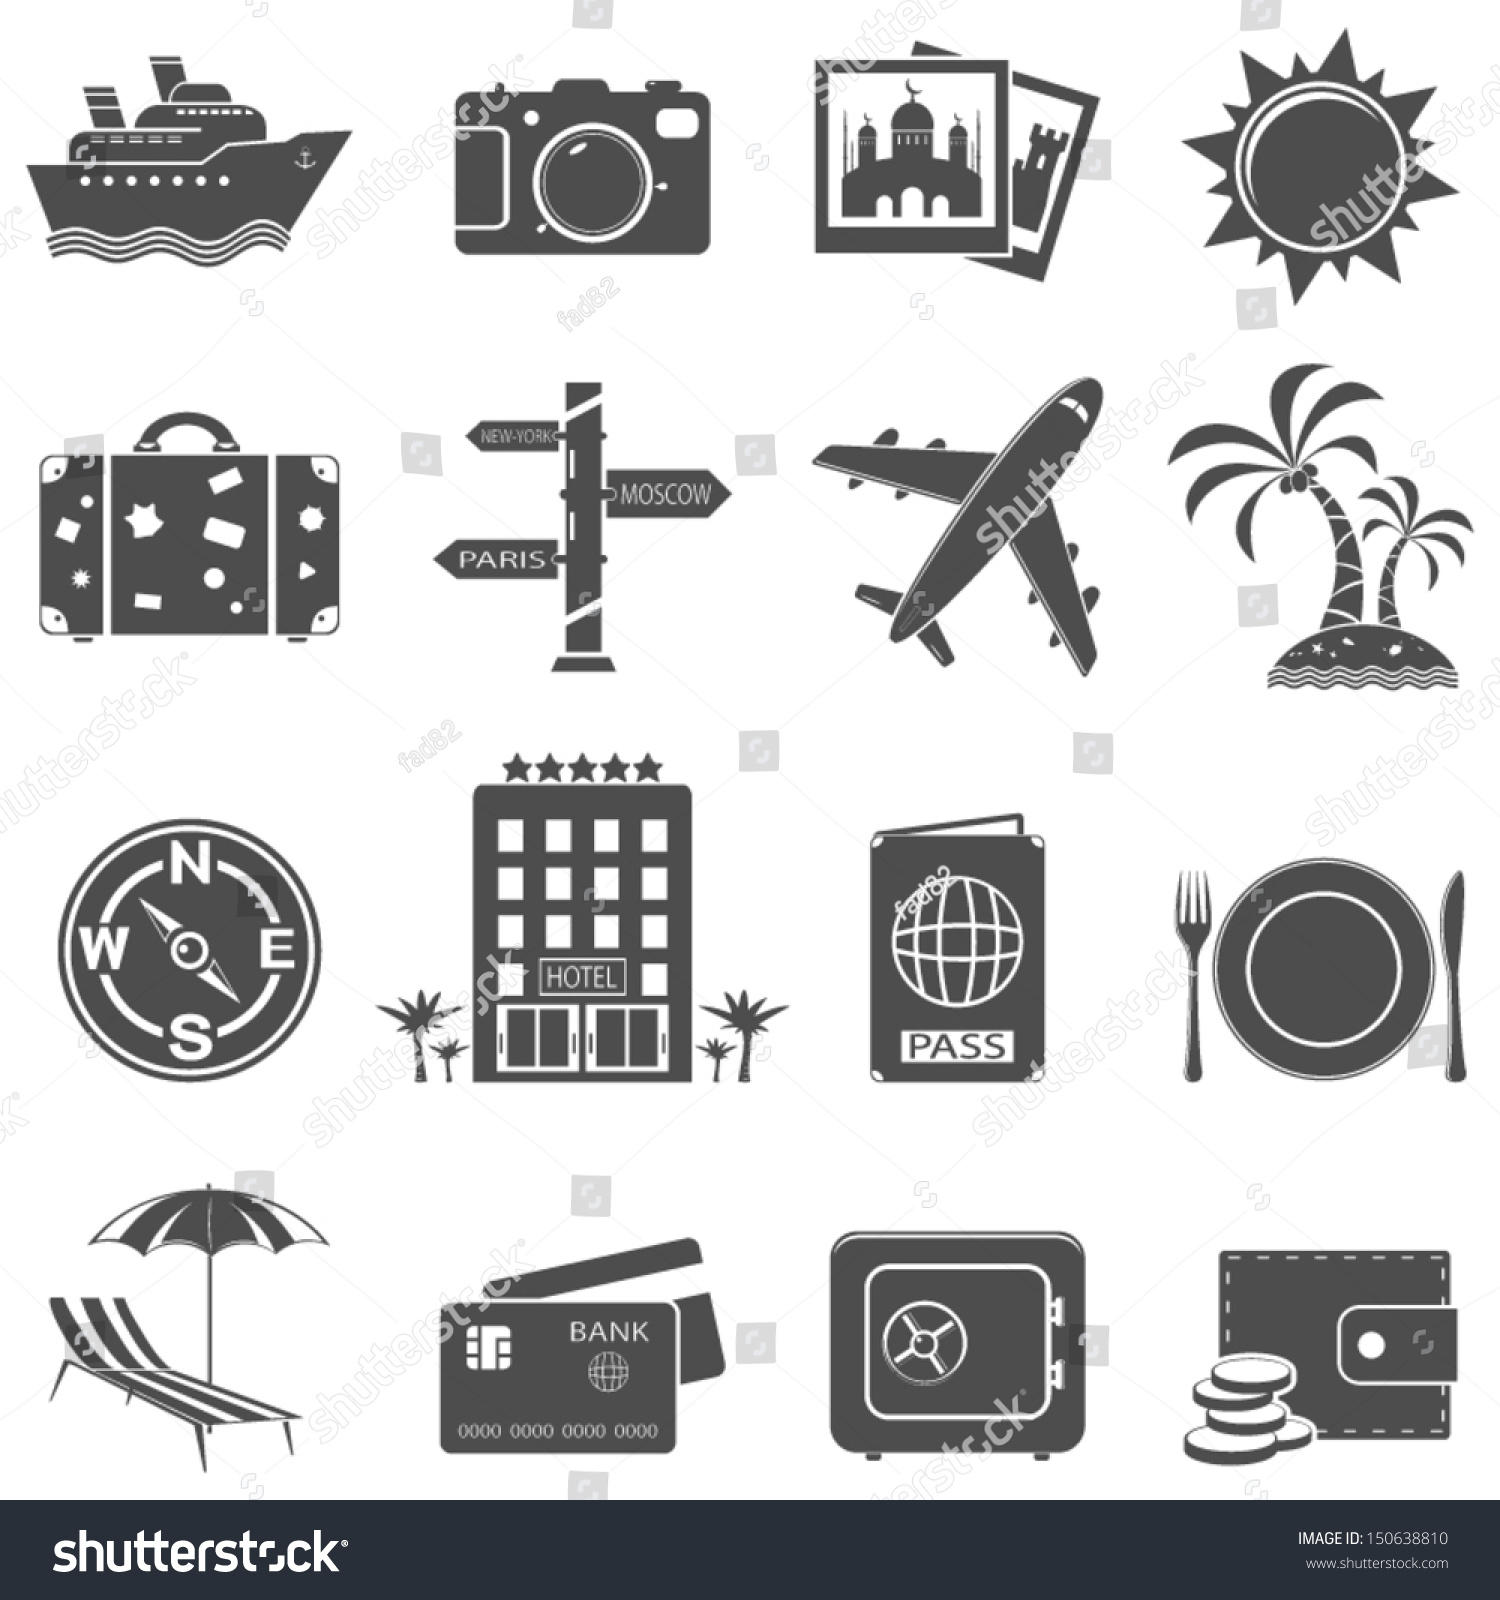 Travel and tourism icon set #150638810